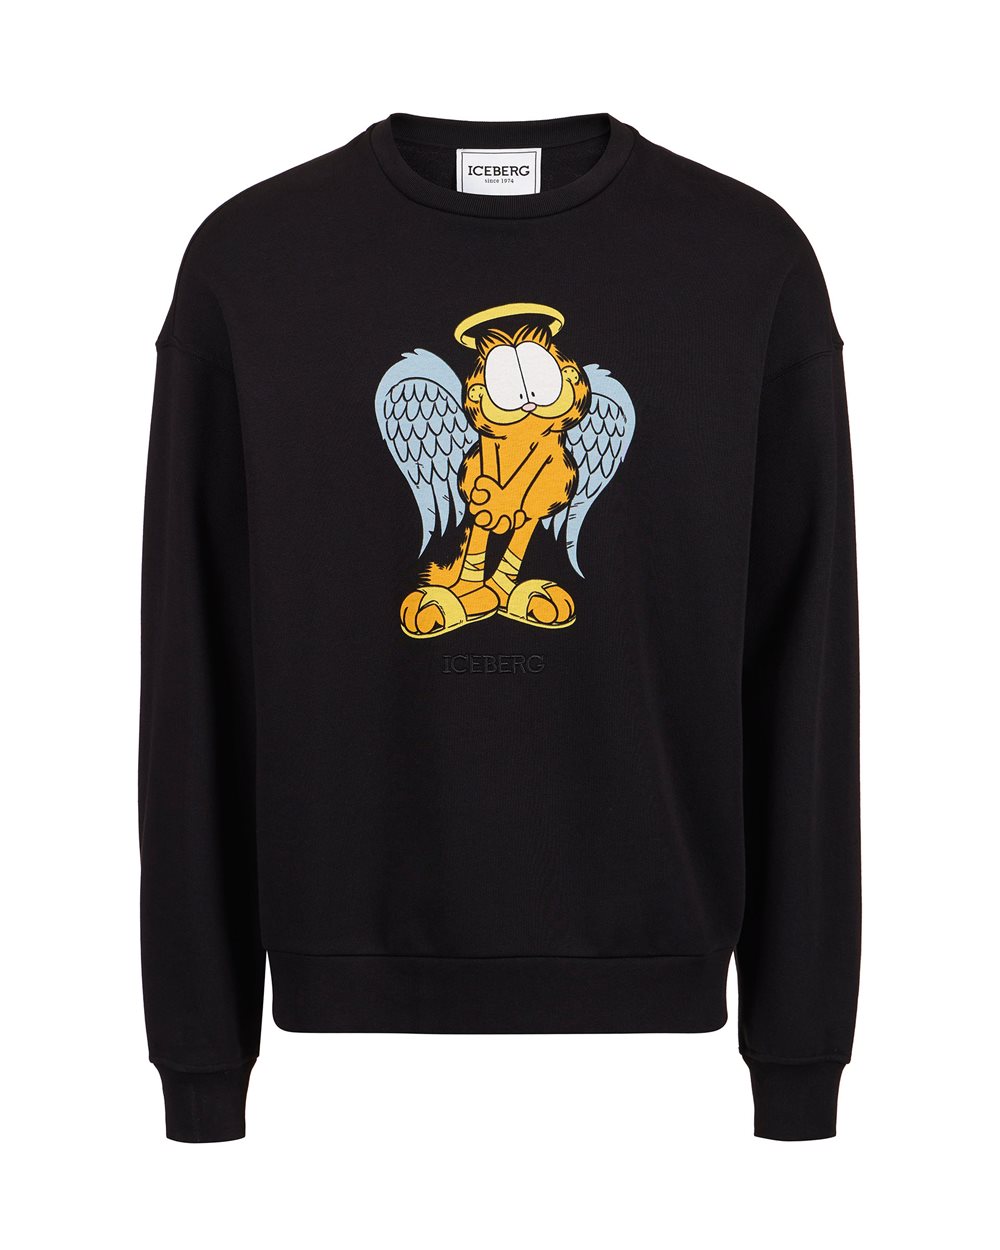 Sweatshirt with Garfield design - carosello preview uomo | Iceberg - Official Website